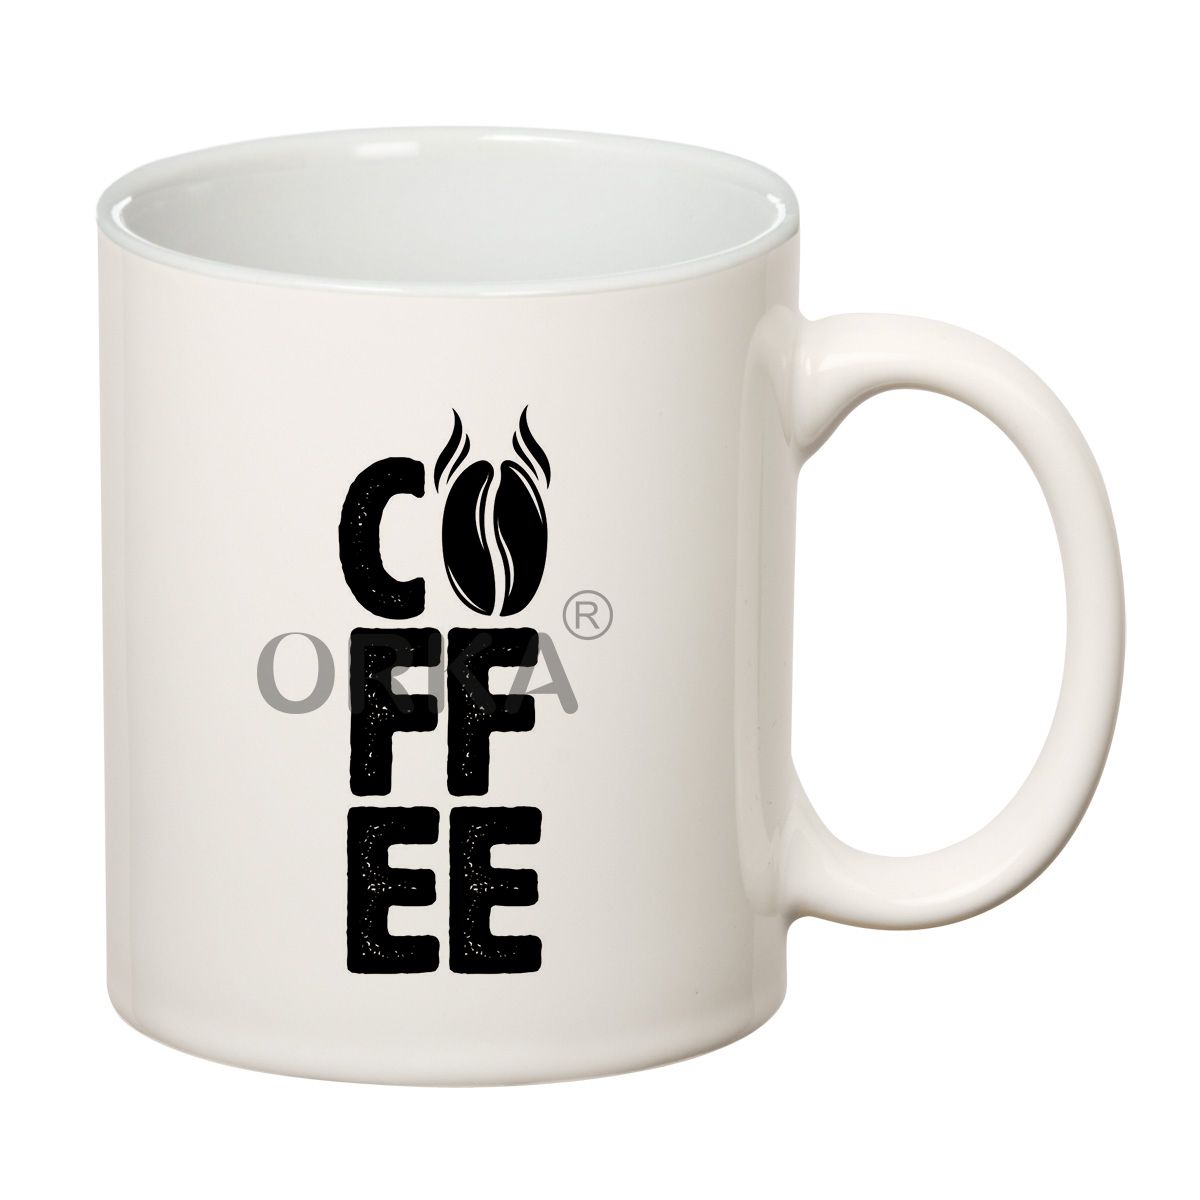 ORKA Coffee Mug Quotes Printed(Coffee) Theme 11 Oz   